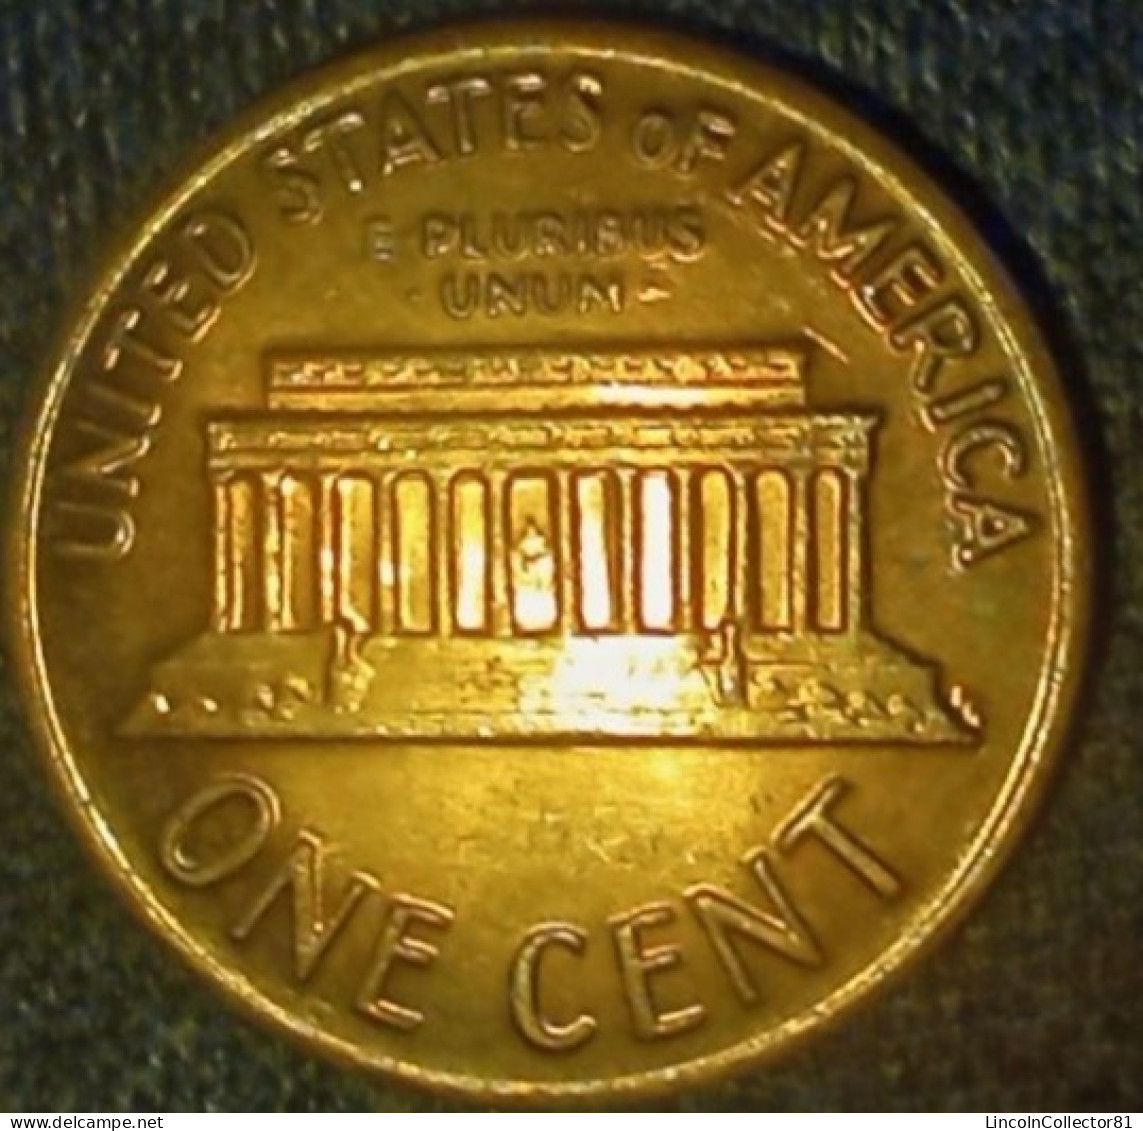 1972 P Lincoln Memorial Penny DDO DDR RD